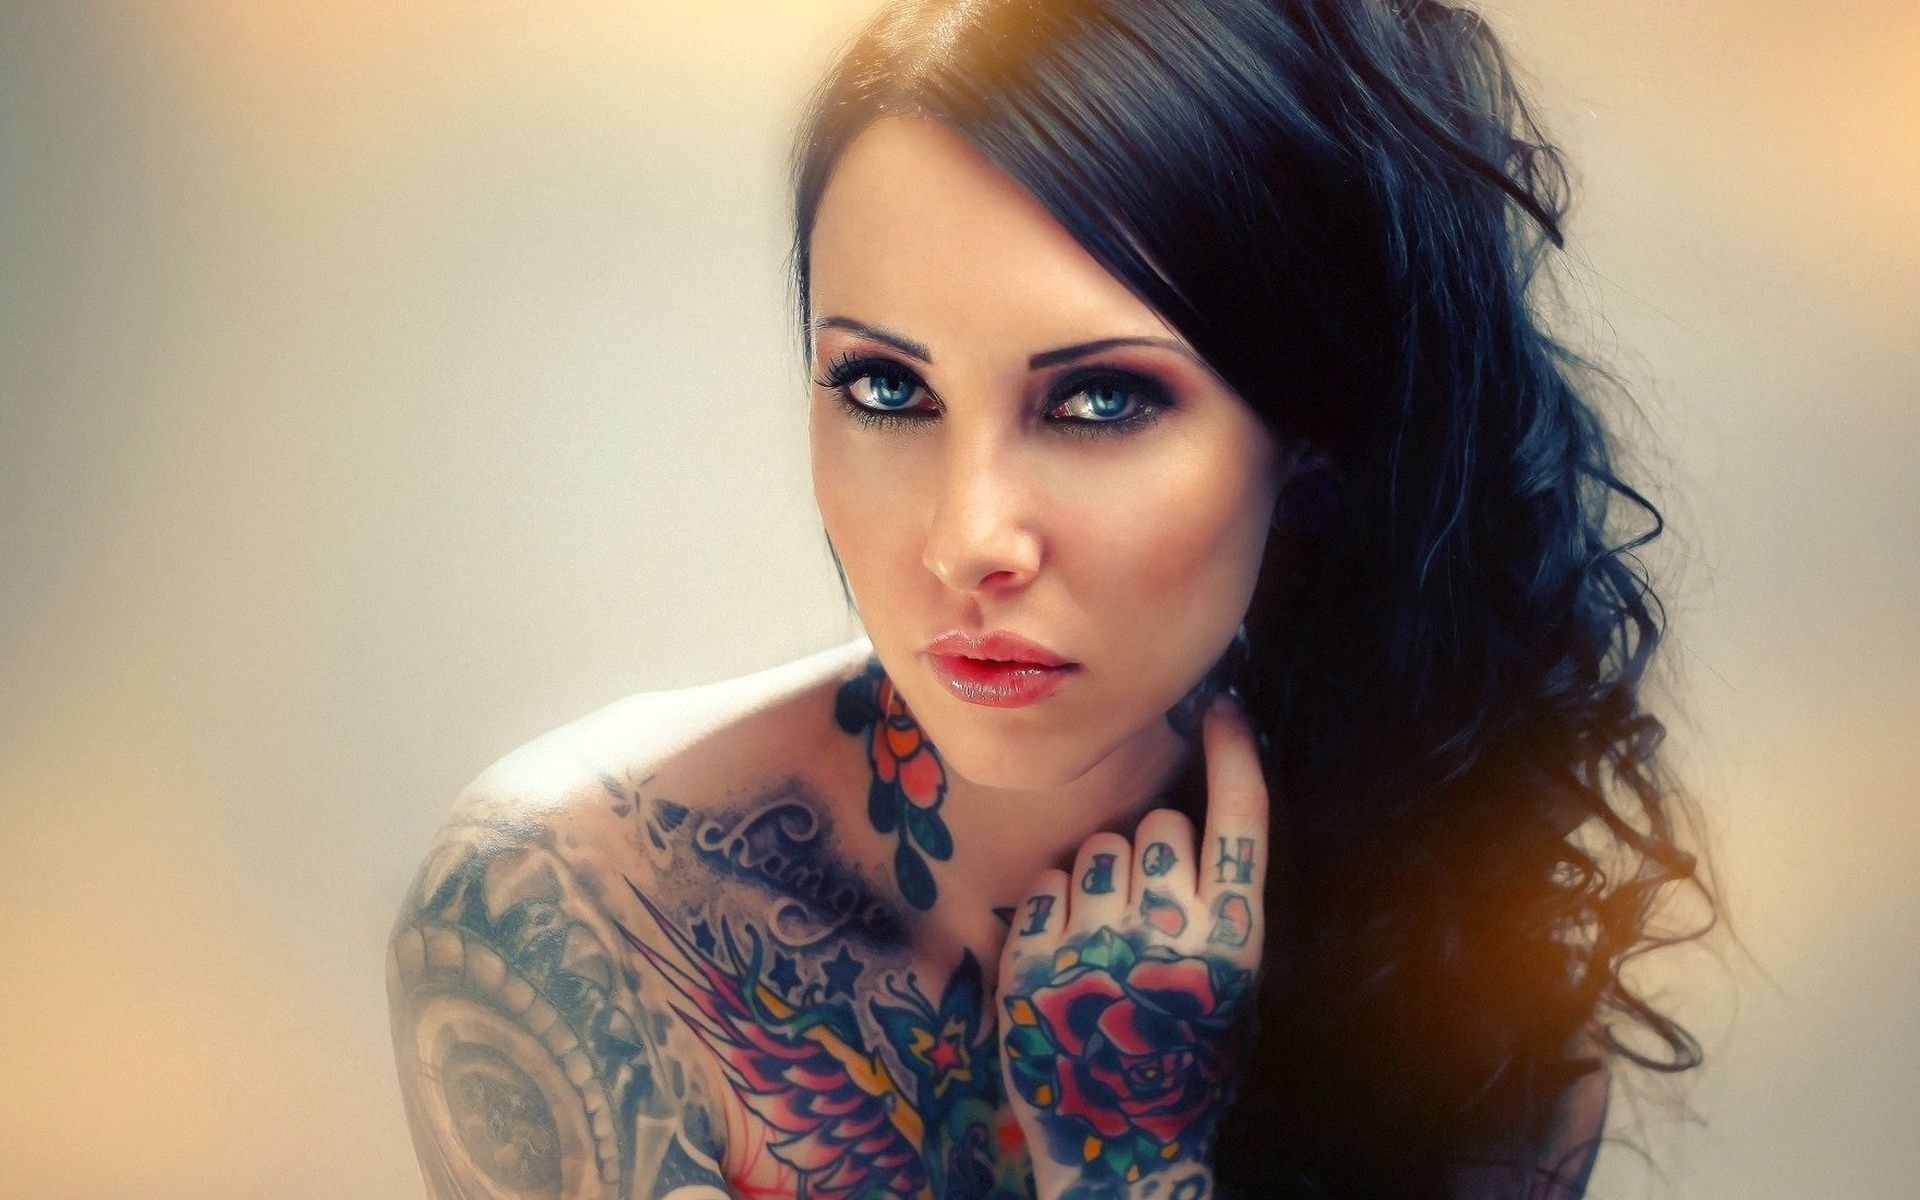 Appealing Tattoos for Women 60